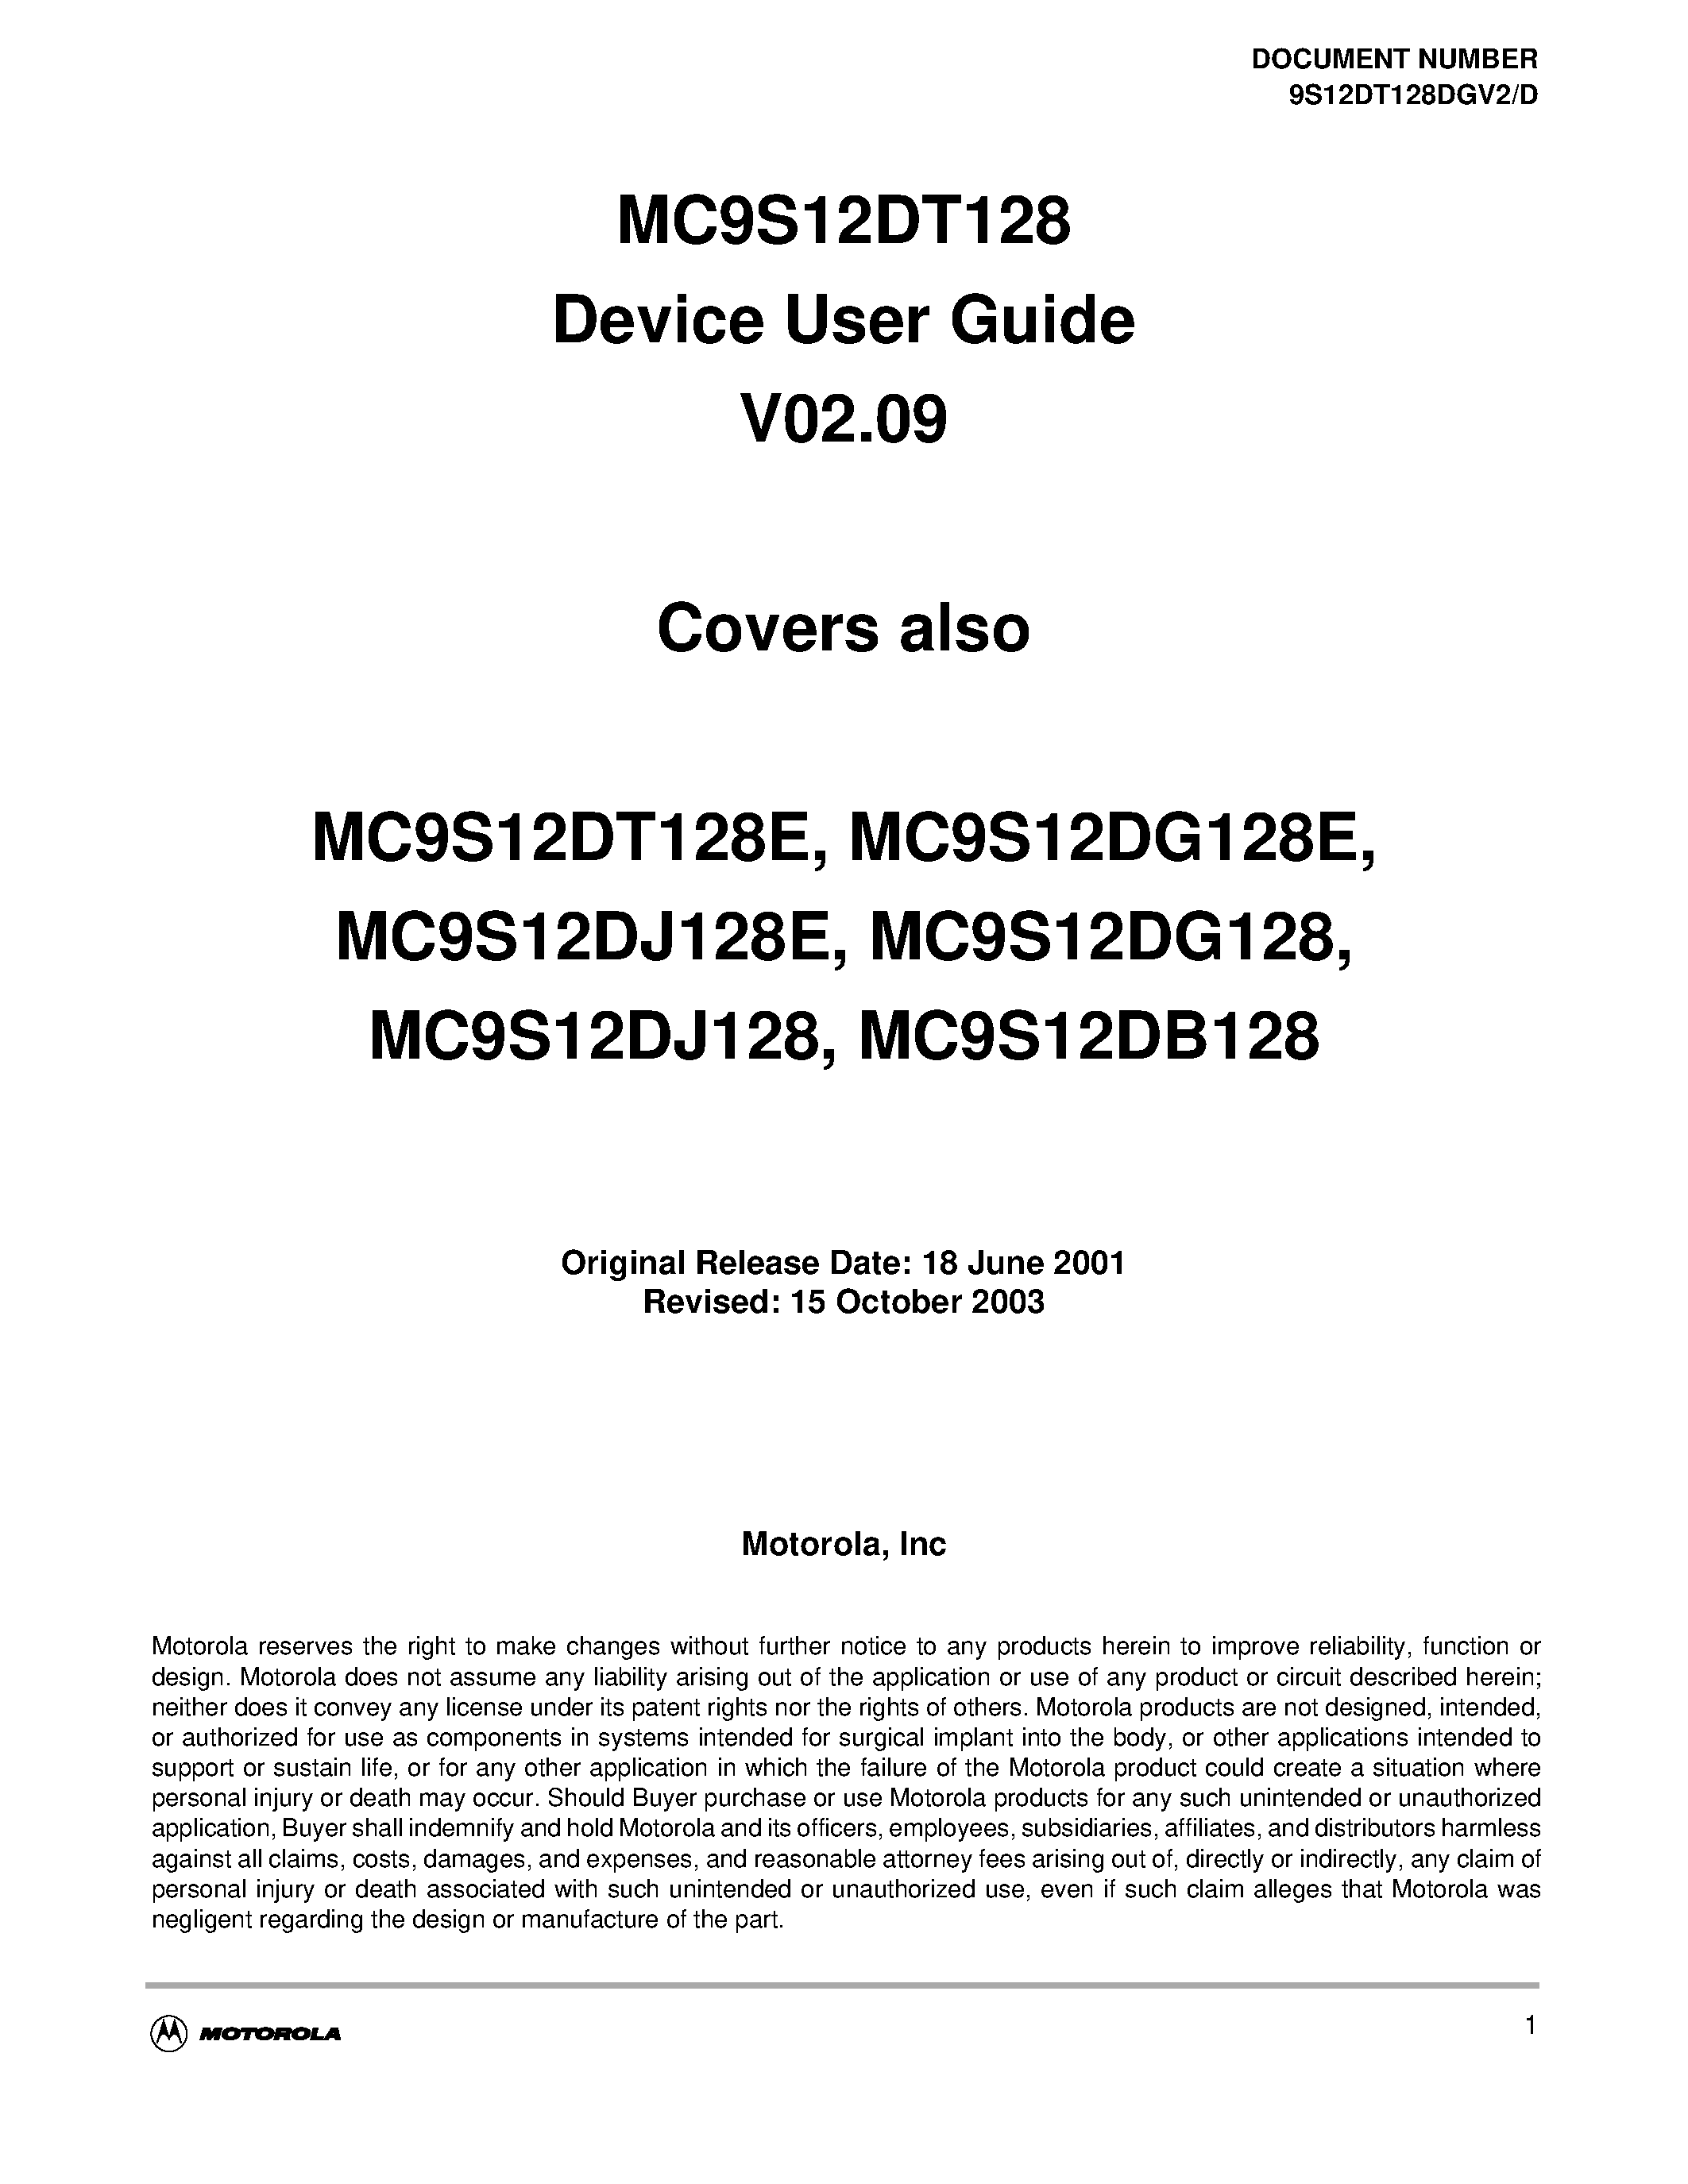 Даташит SC515849 - MC9S12DT128 Device User Guide V02.09 страница 1